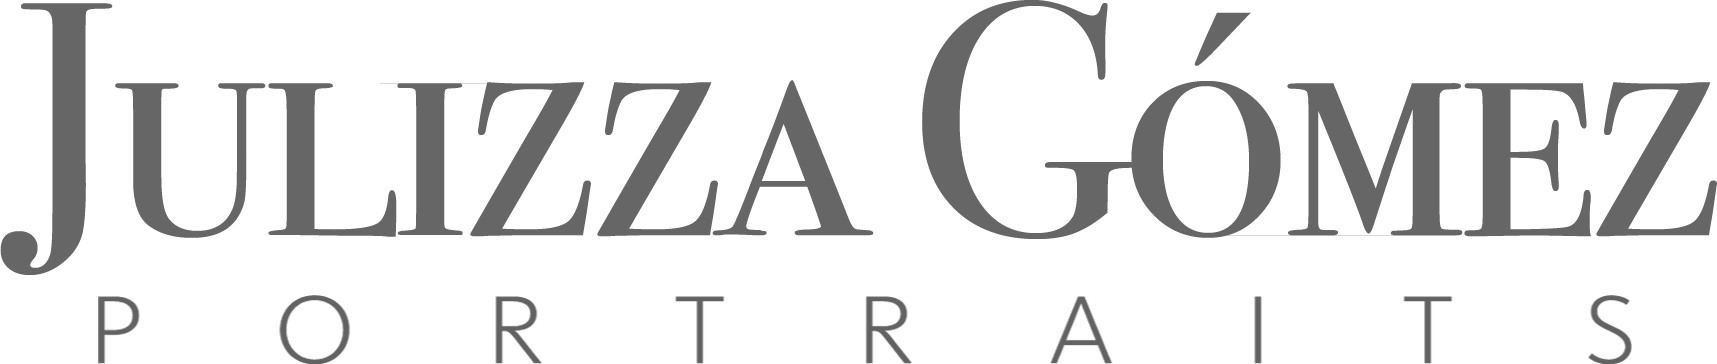 Julizza Gomer Portraits Logo